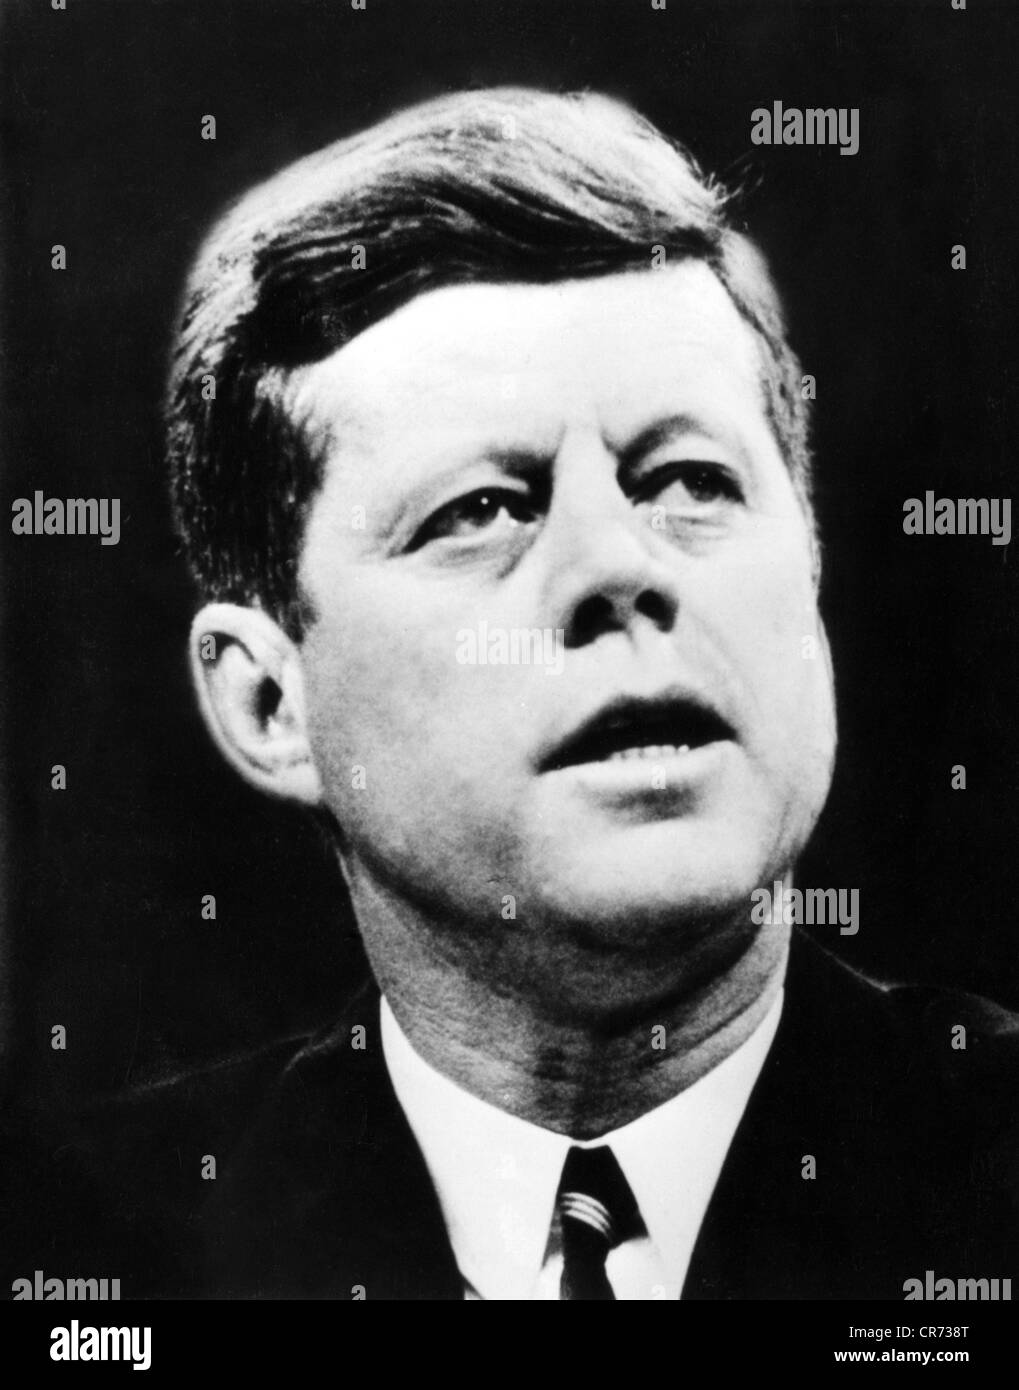 Kennedy, John Fitzgerald, 29.5.1917 - 22.11.1963, US-amerikanischer Politiker (Dem.), Präsident der USA 20.1.1961 - 22.11.1963, Porträt, Anfang der 1960er Jahre, Stockfoto